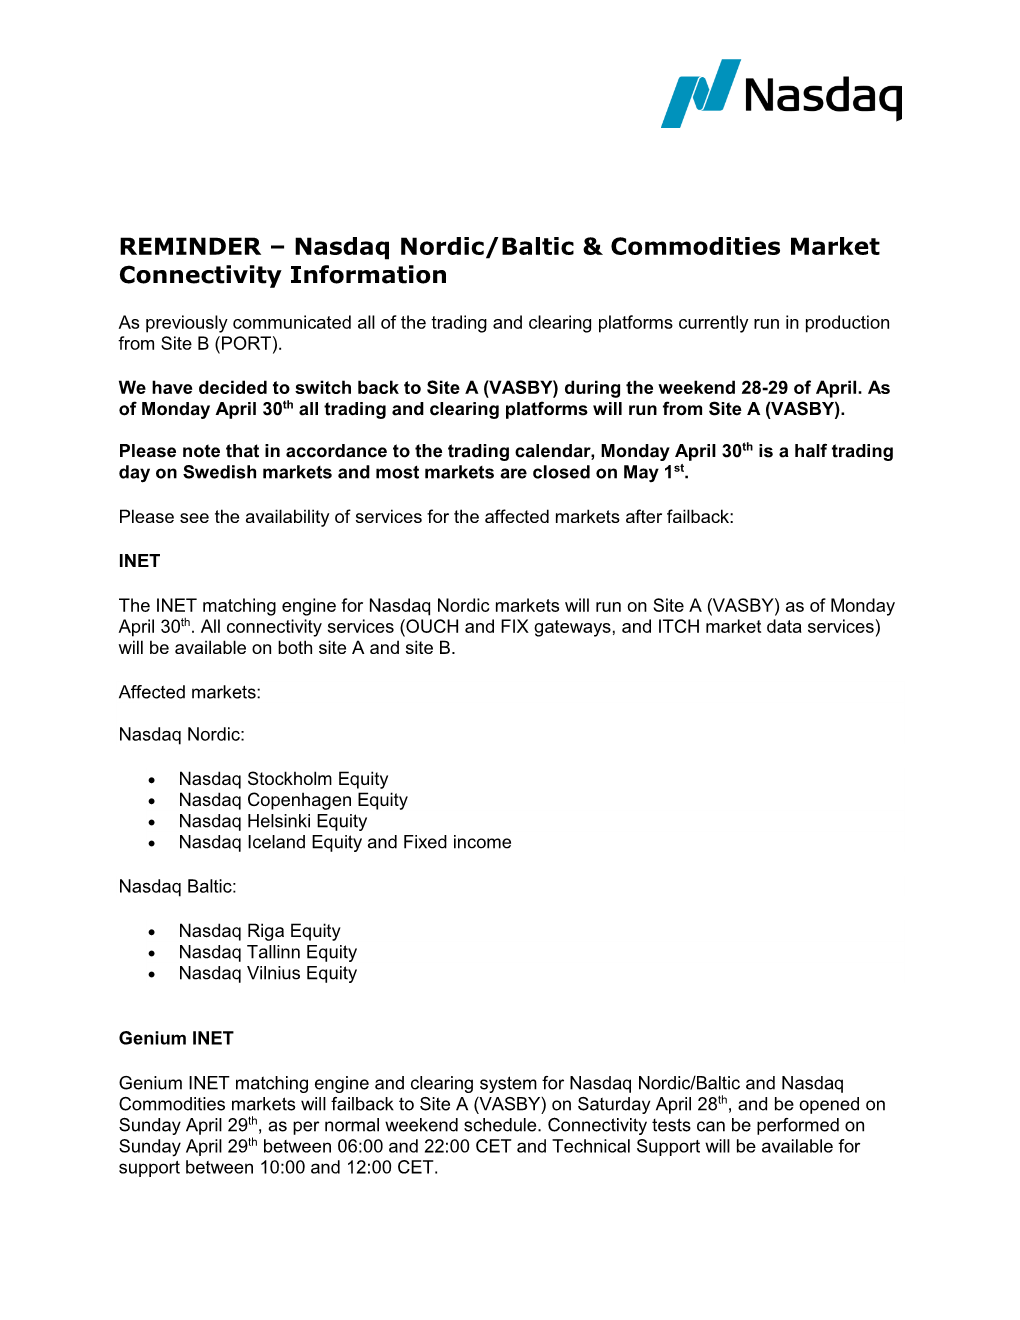 Nasdaq Nordic/Baltic & Commodities Market Connectivity Information